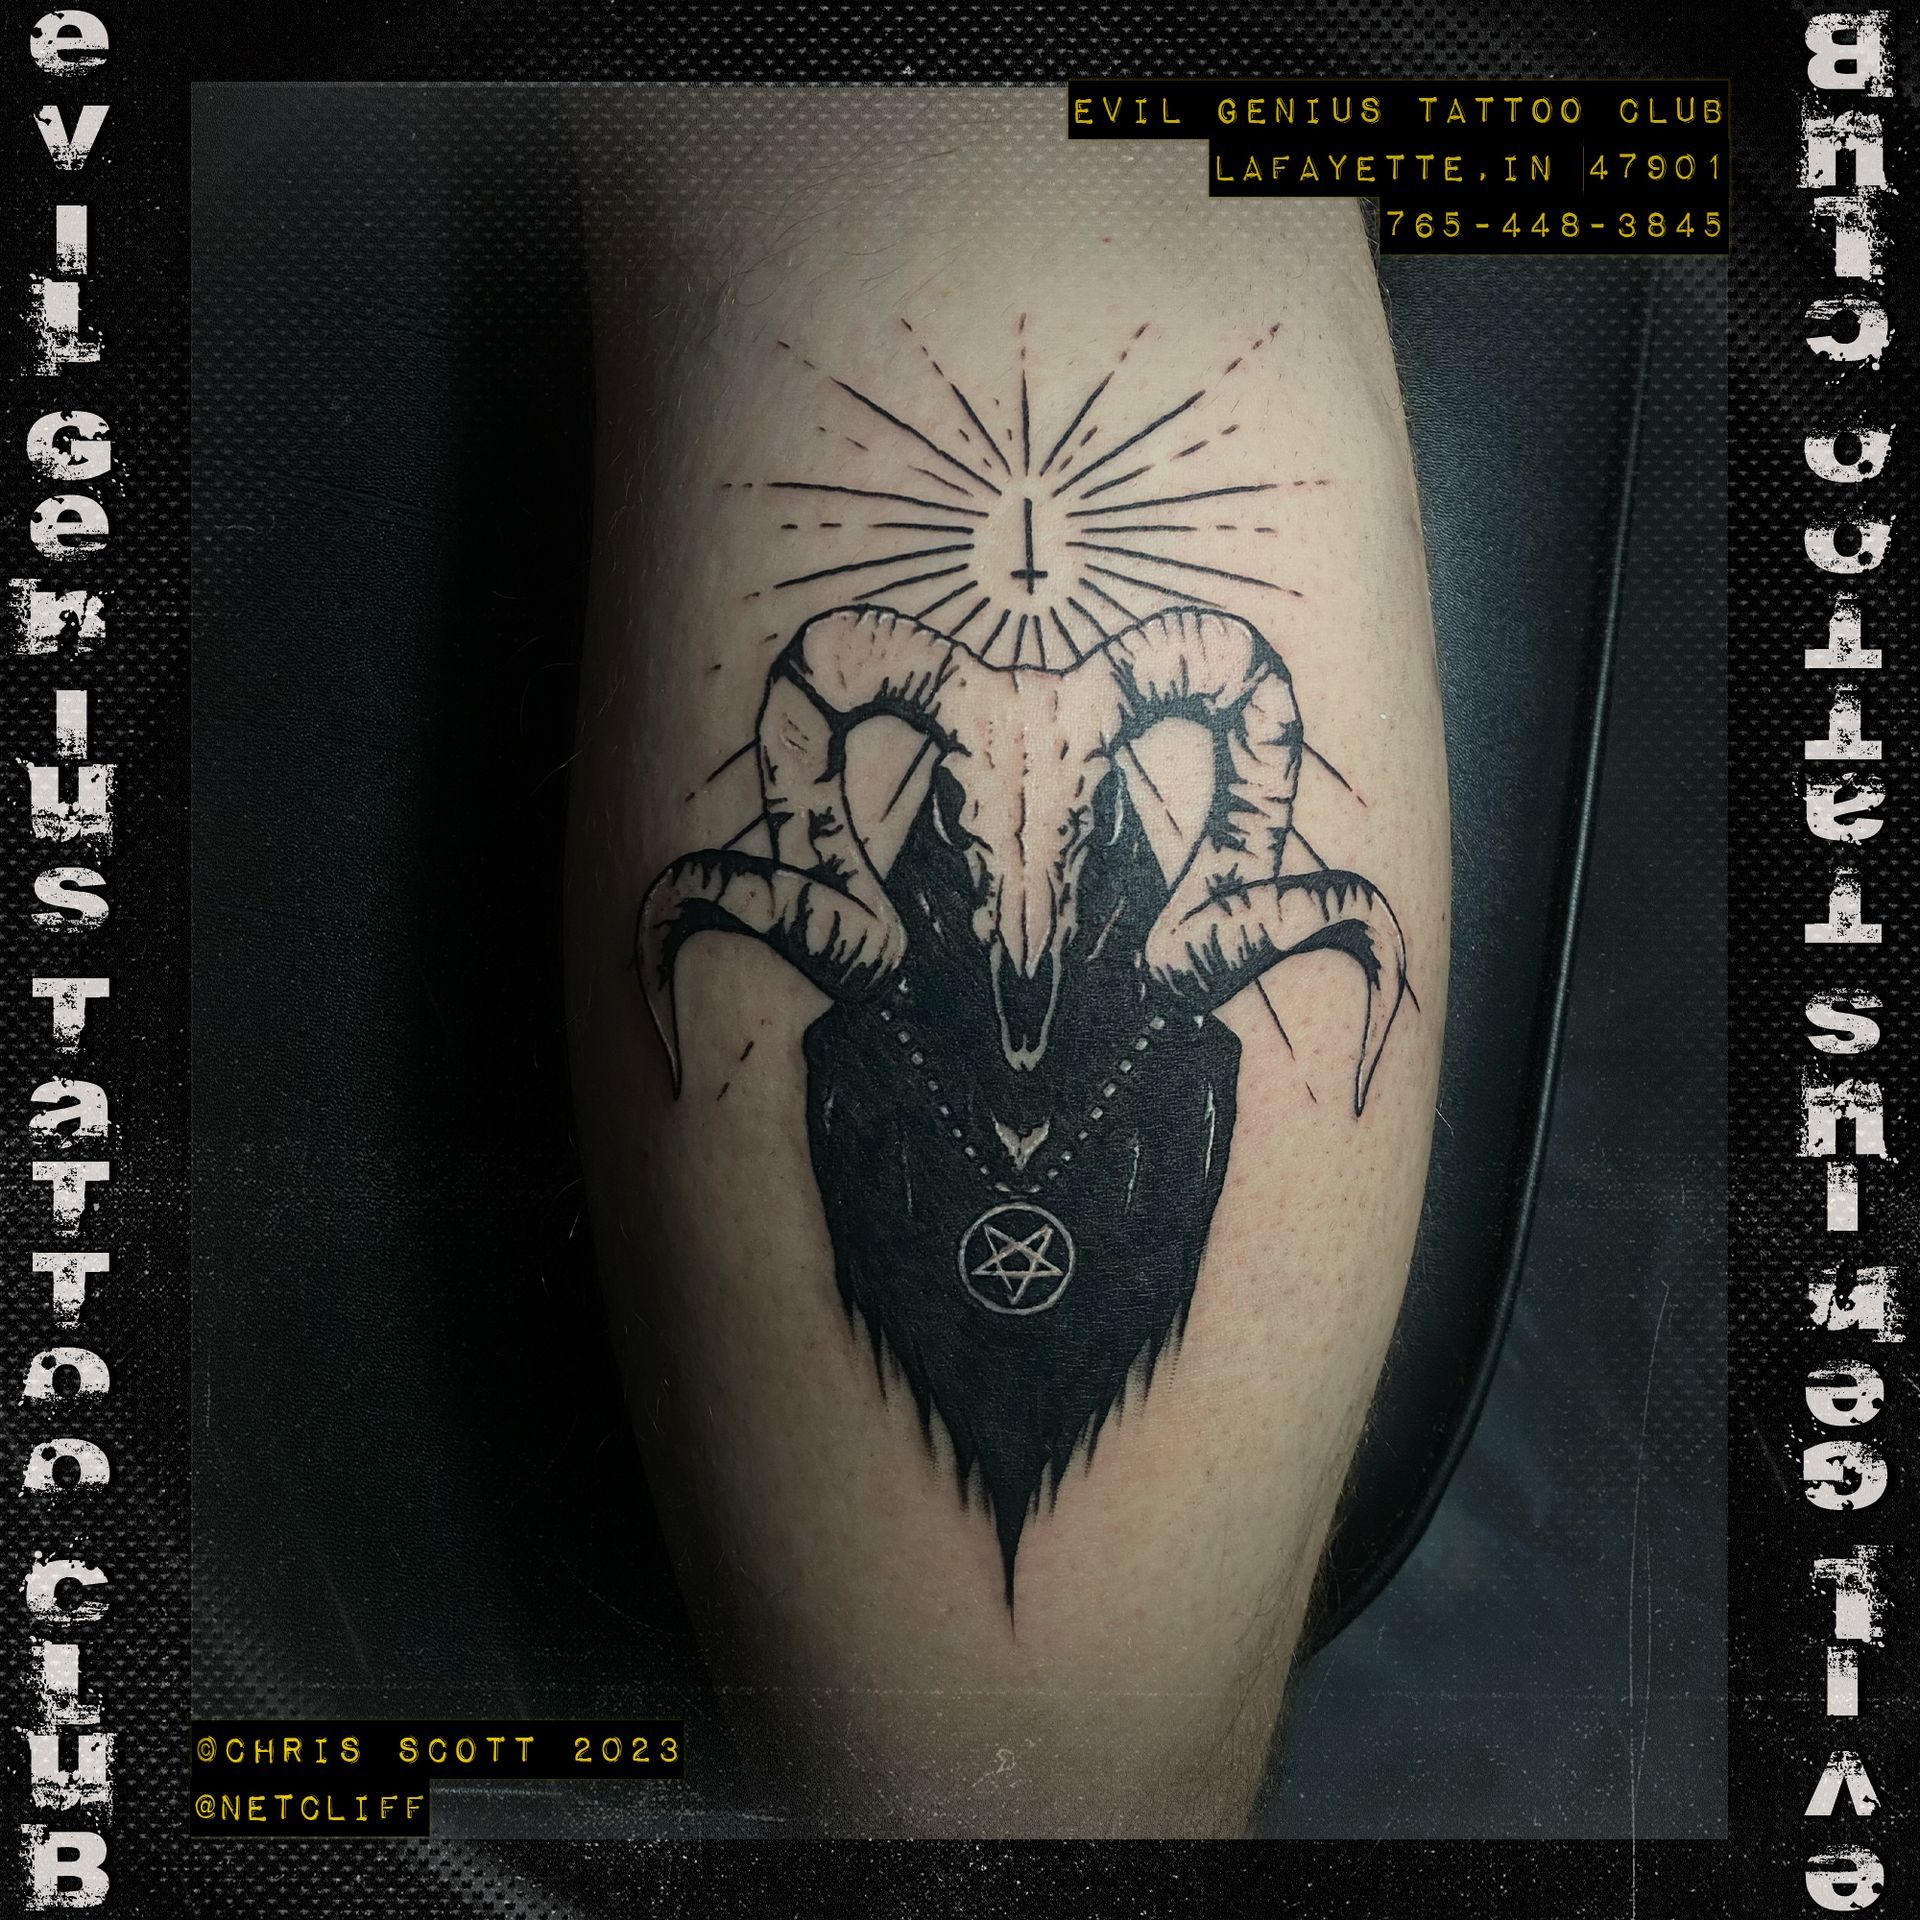 demonic entity tattoo by Chris Scott 